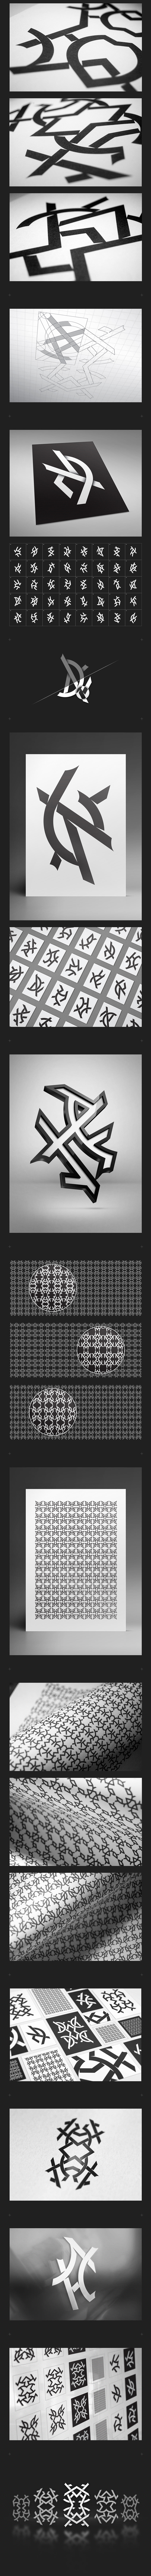 geometry symmetry pattern vector figures series print graphic set symbol black shapes poster Wrap